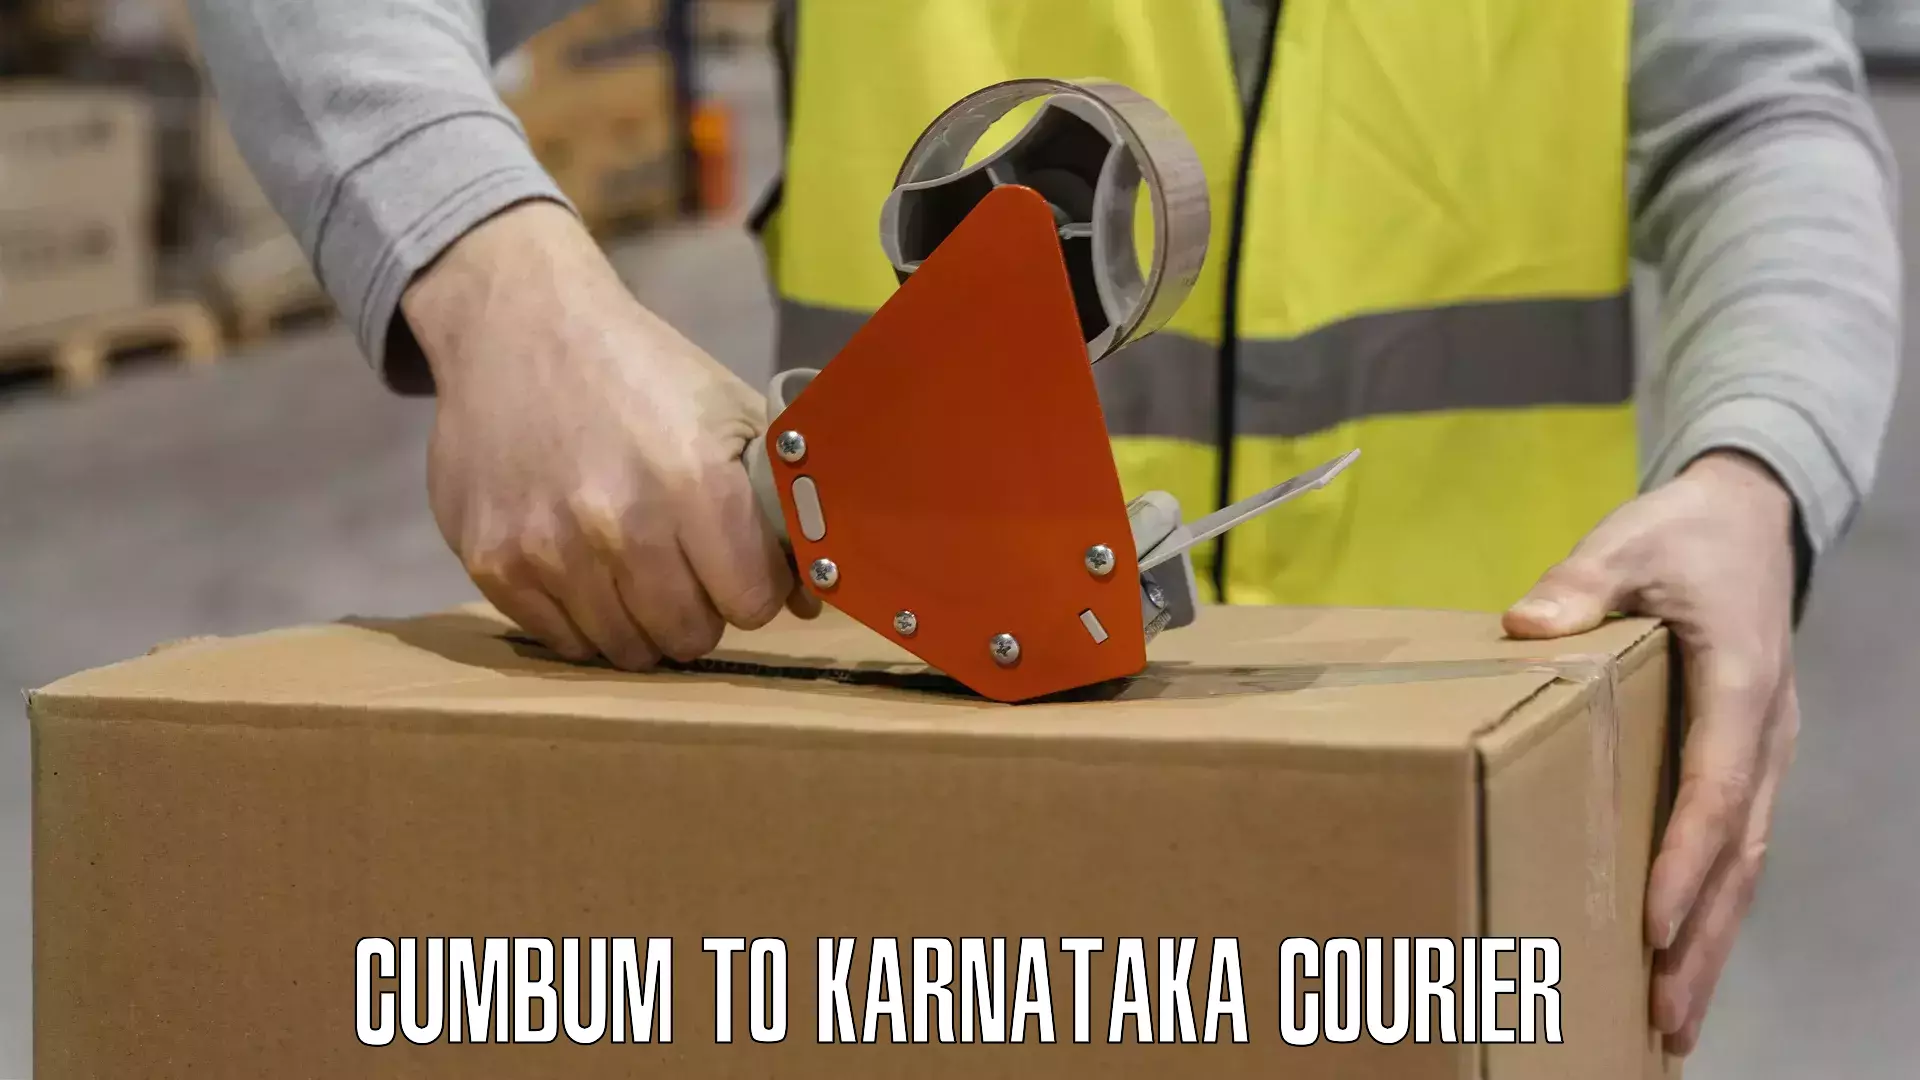 Cash on delivery service Cumbum to Karnataka